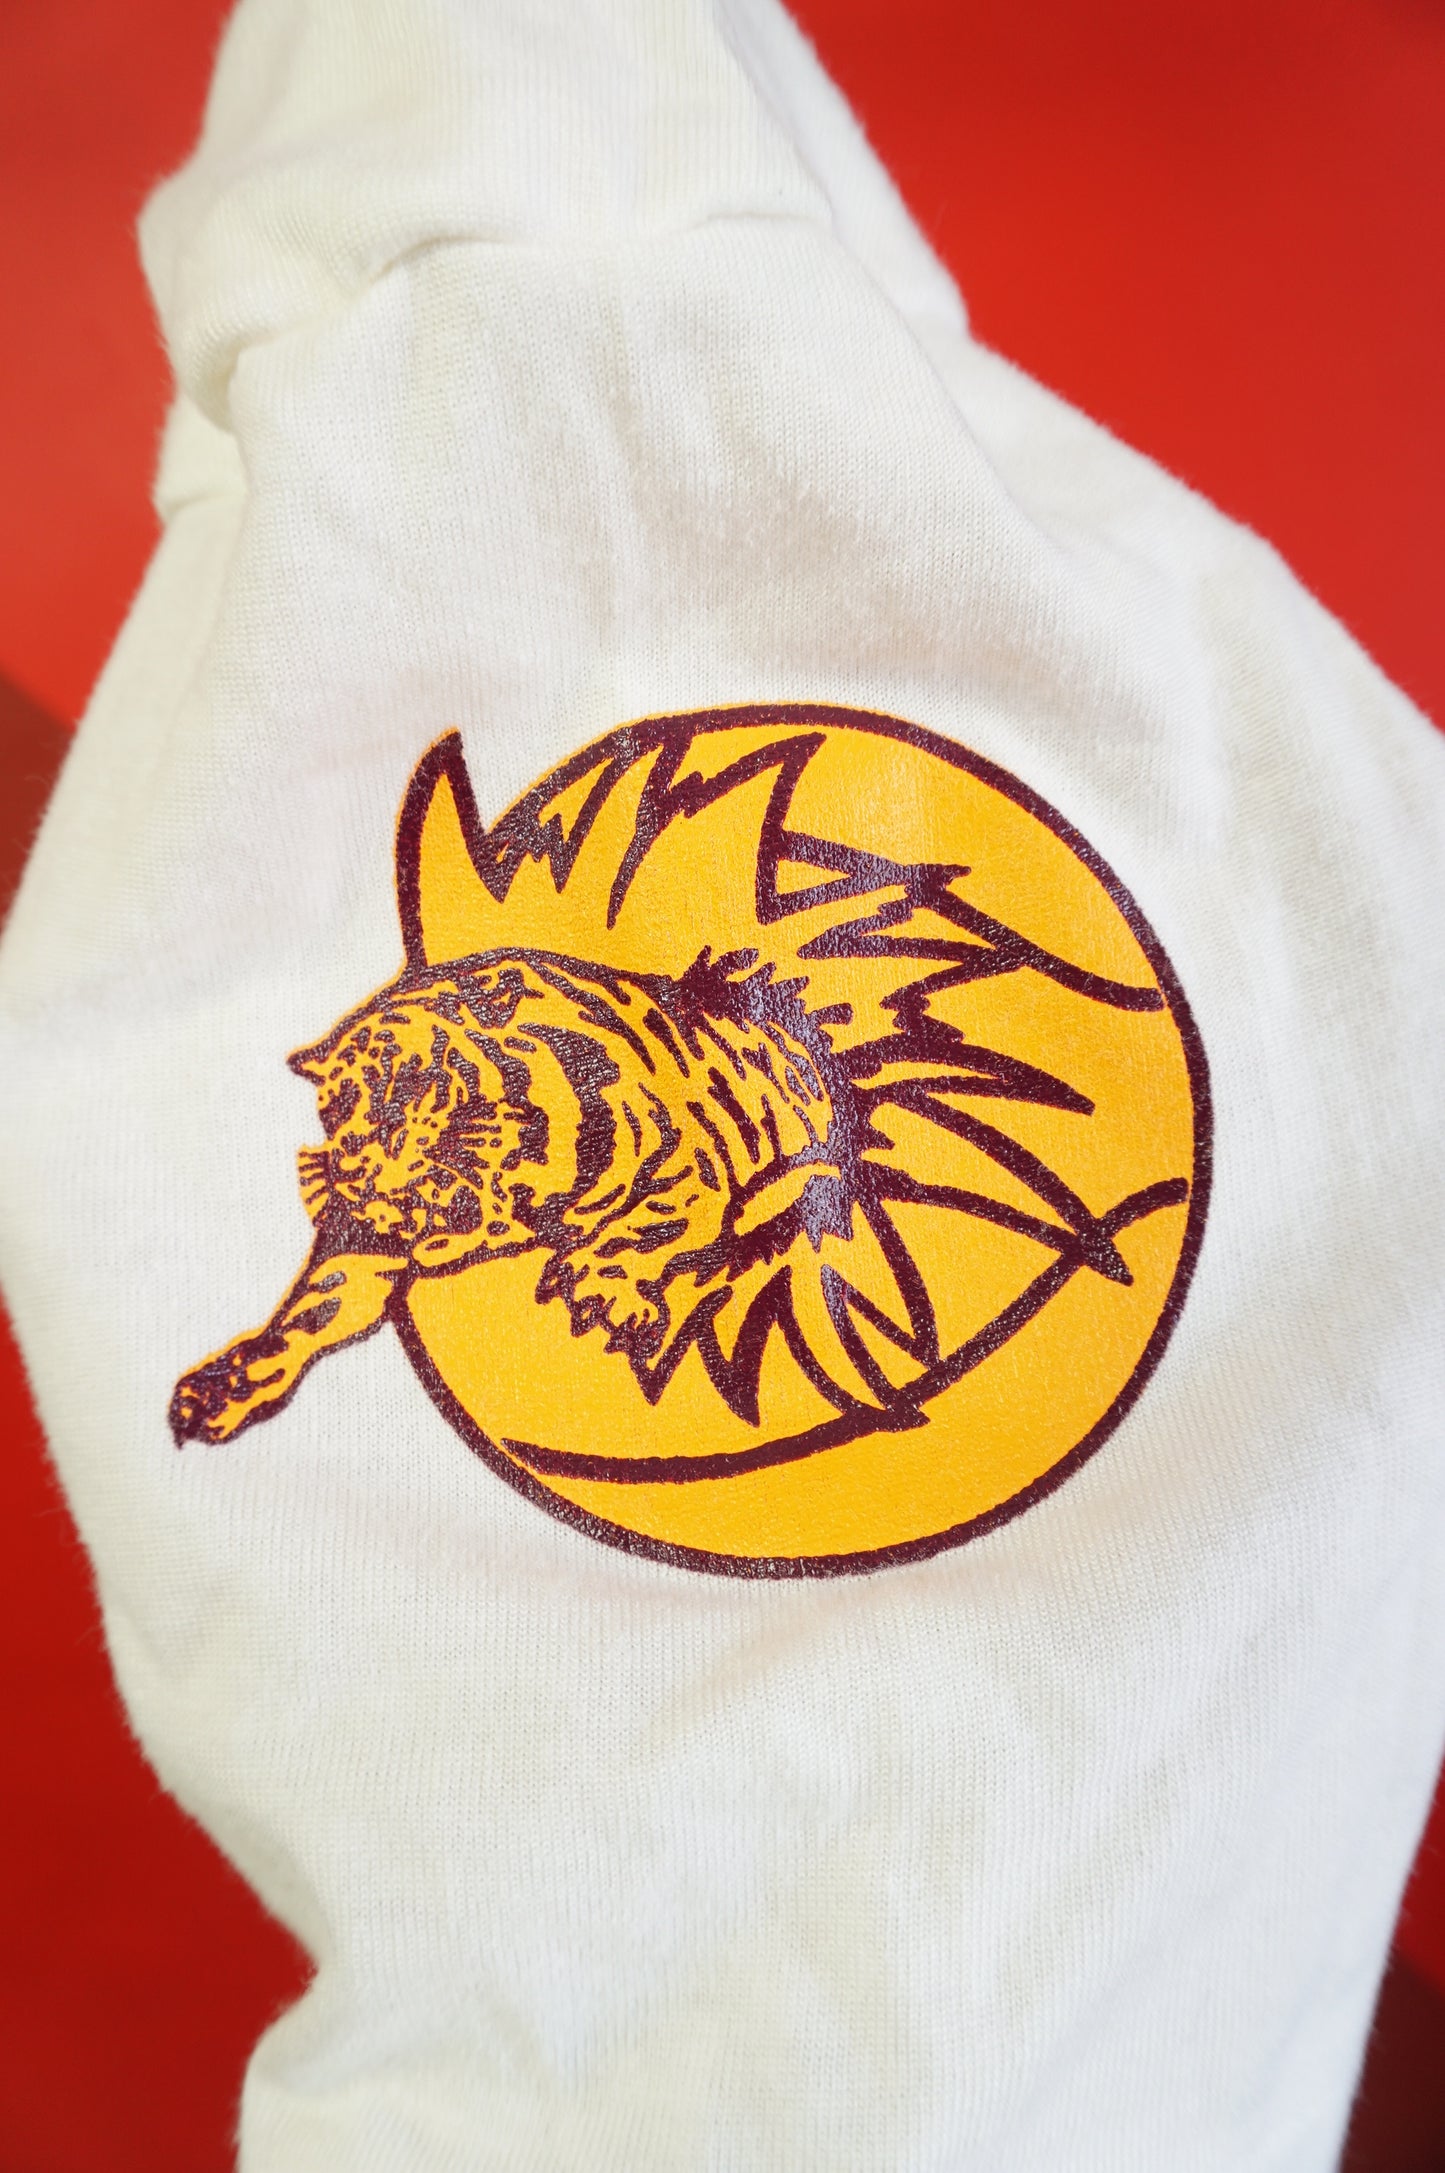 (M/L) Vtg Tiger Basketball Single Stitch T-Shirt